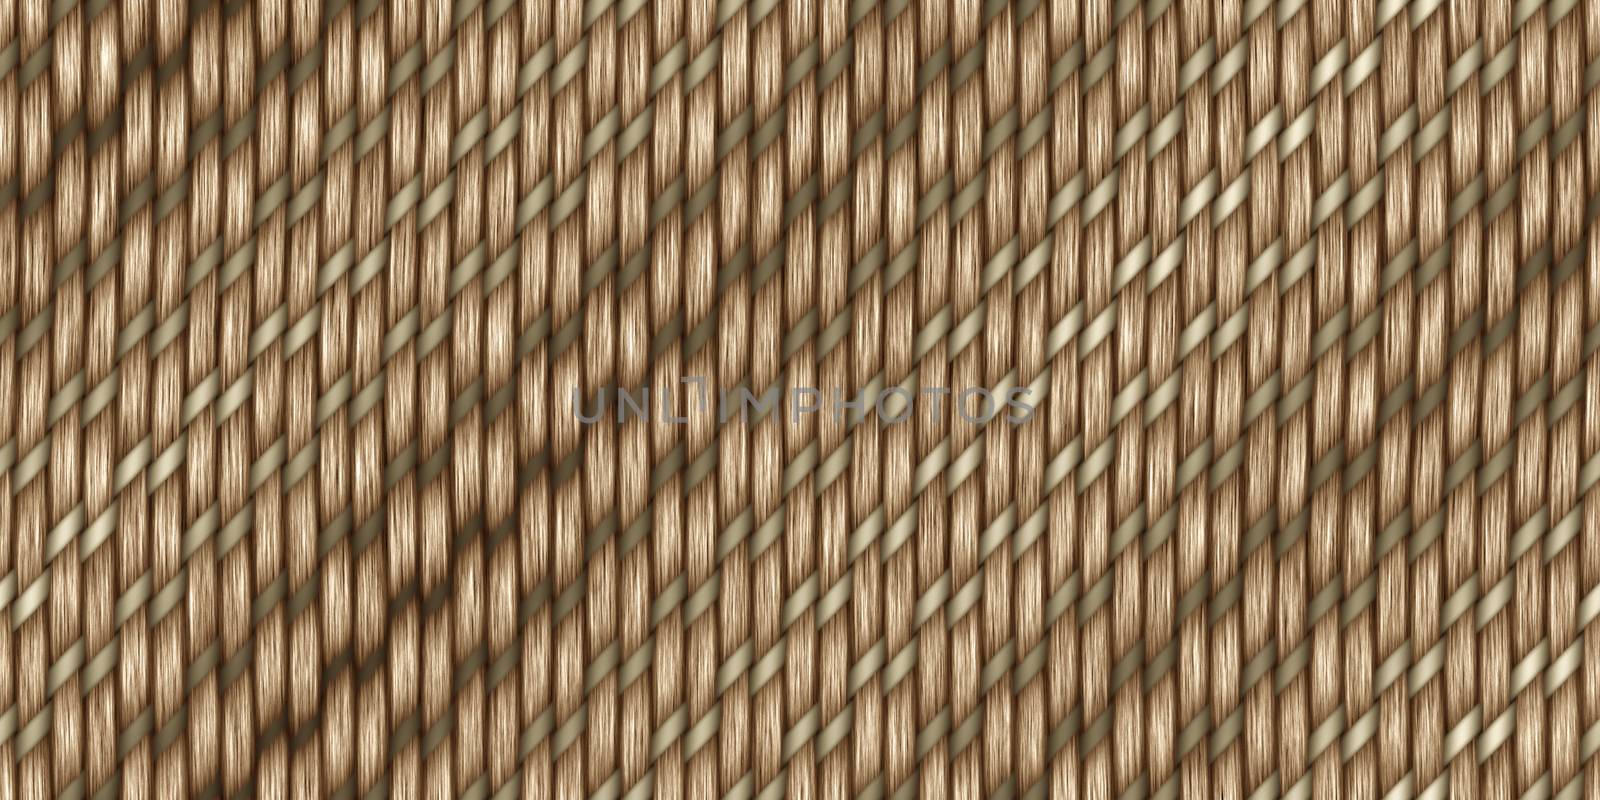 Light Brown Cross Weave Texture. Wicker Rattan Background Surface. 3D Rendering. 3D Illustration.